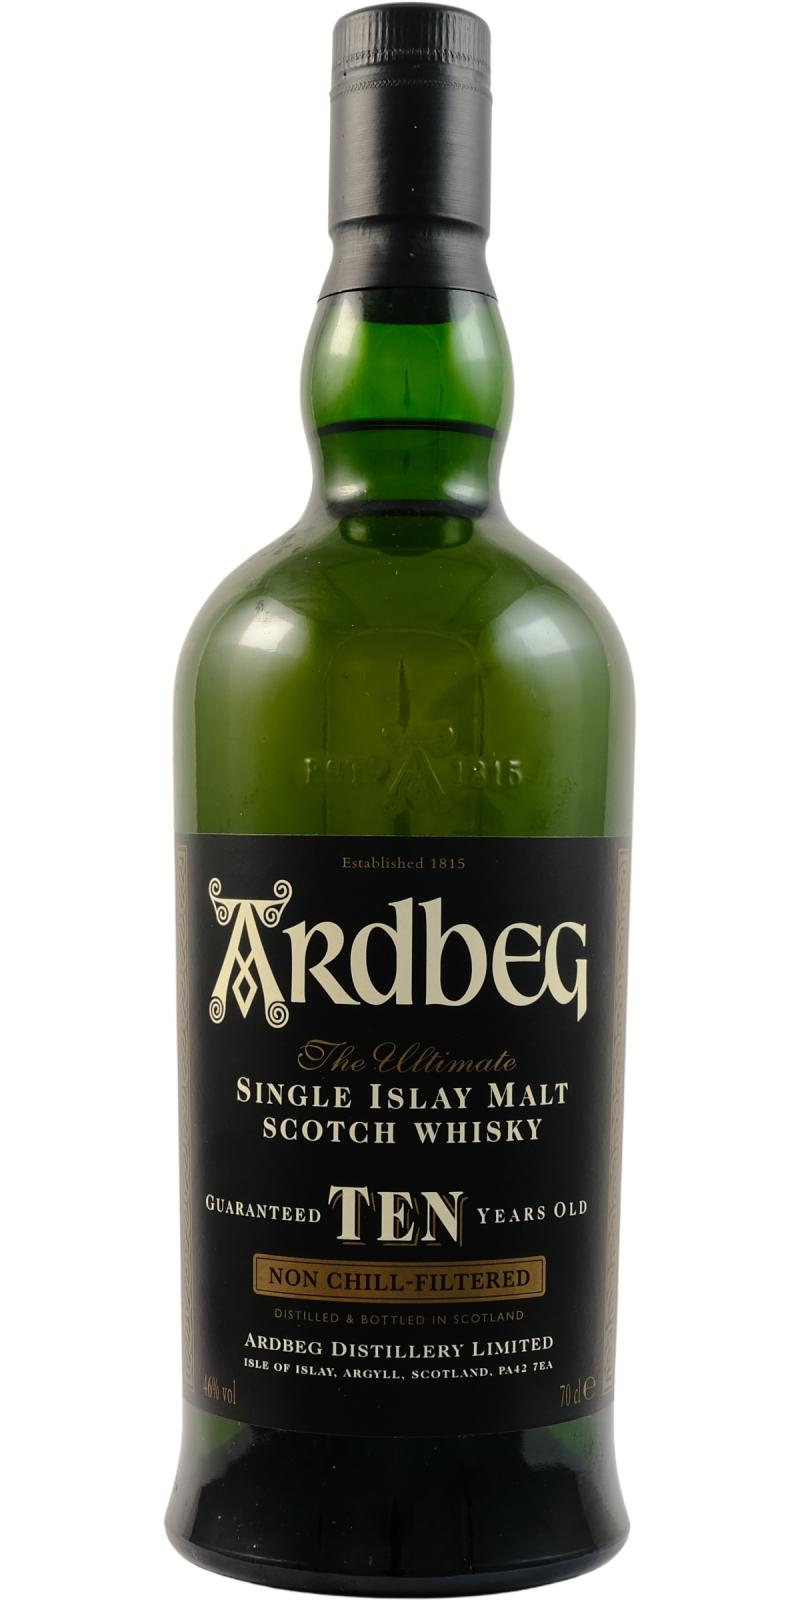 Ardbeg 10 Year Old Single Malt Scotch Whisky (700ml)